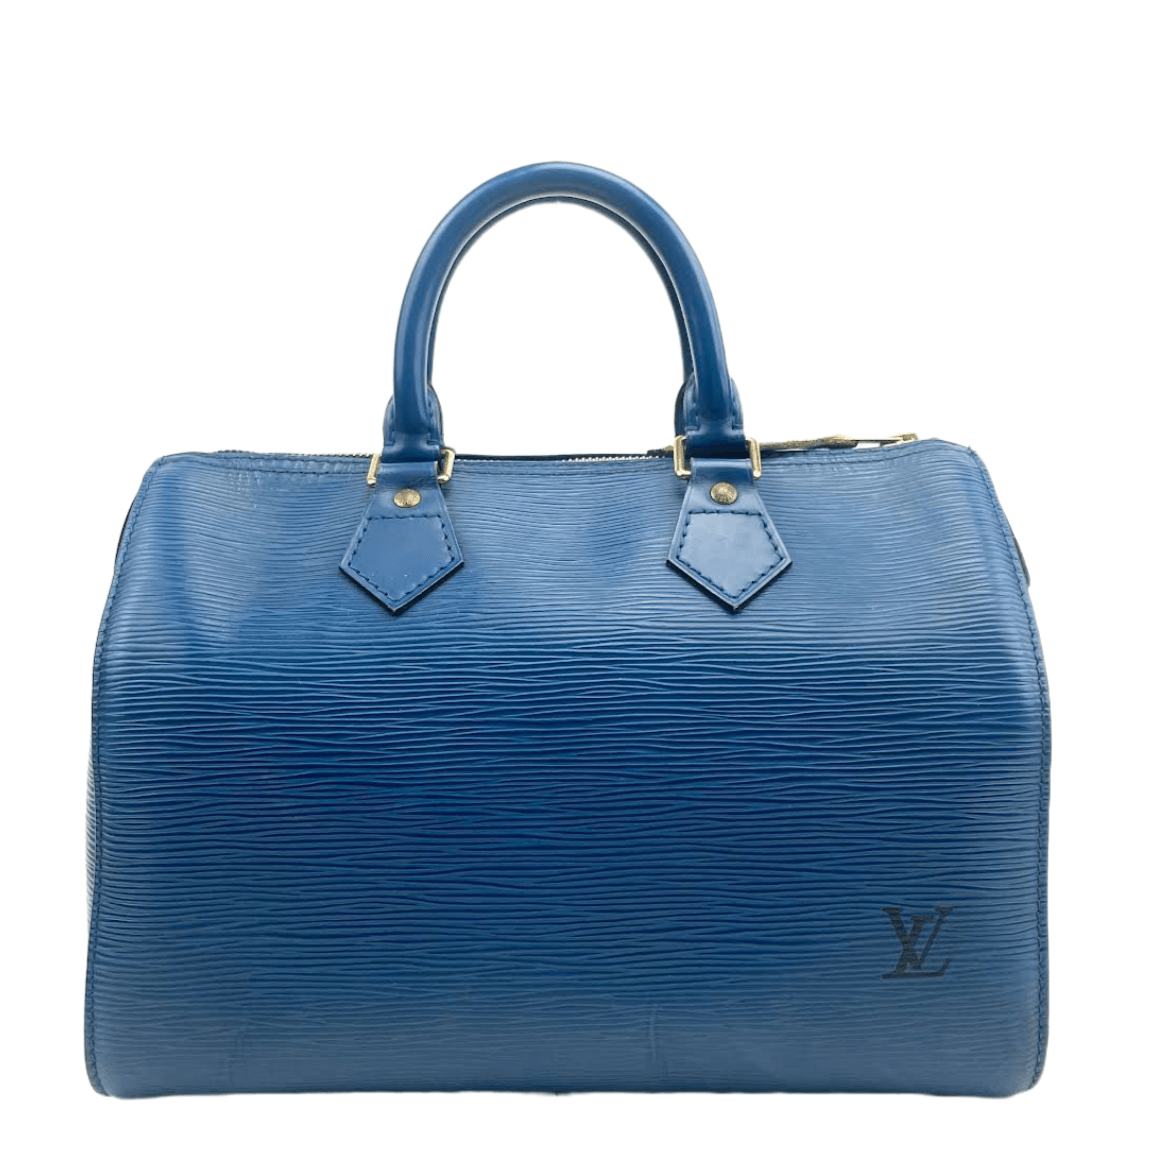 Authentic Louis Vuitton Speedy 25 Bag REDUCED